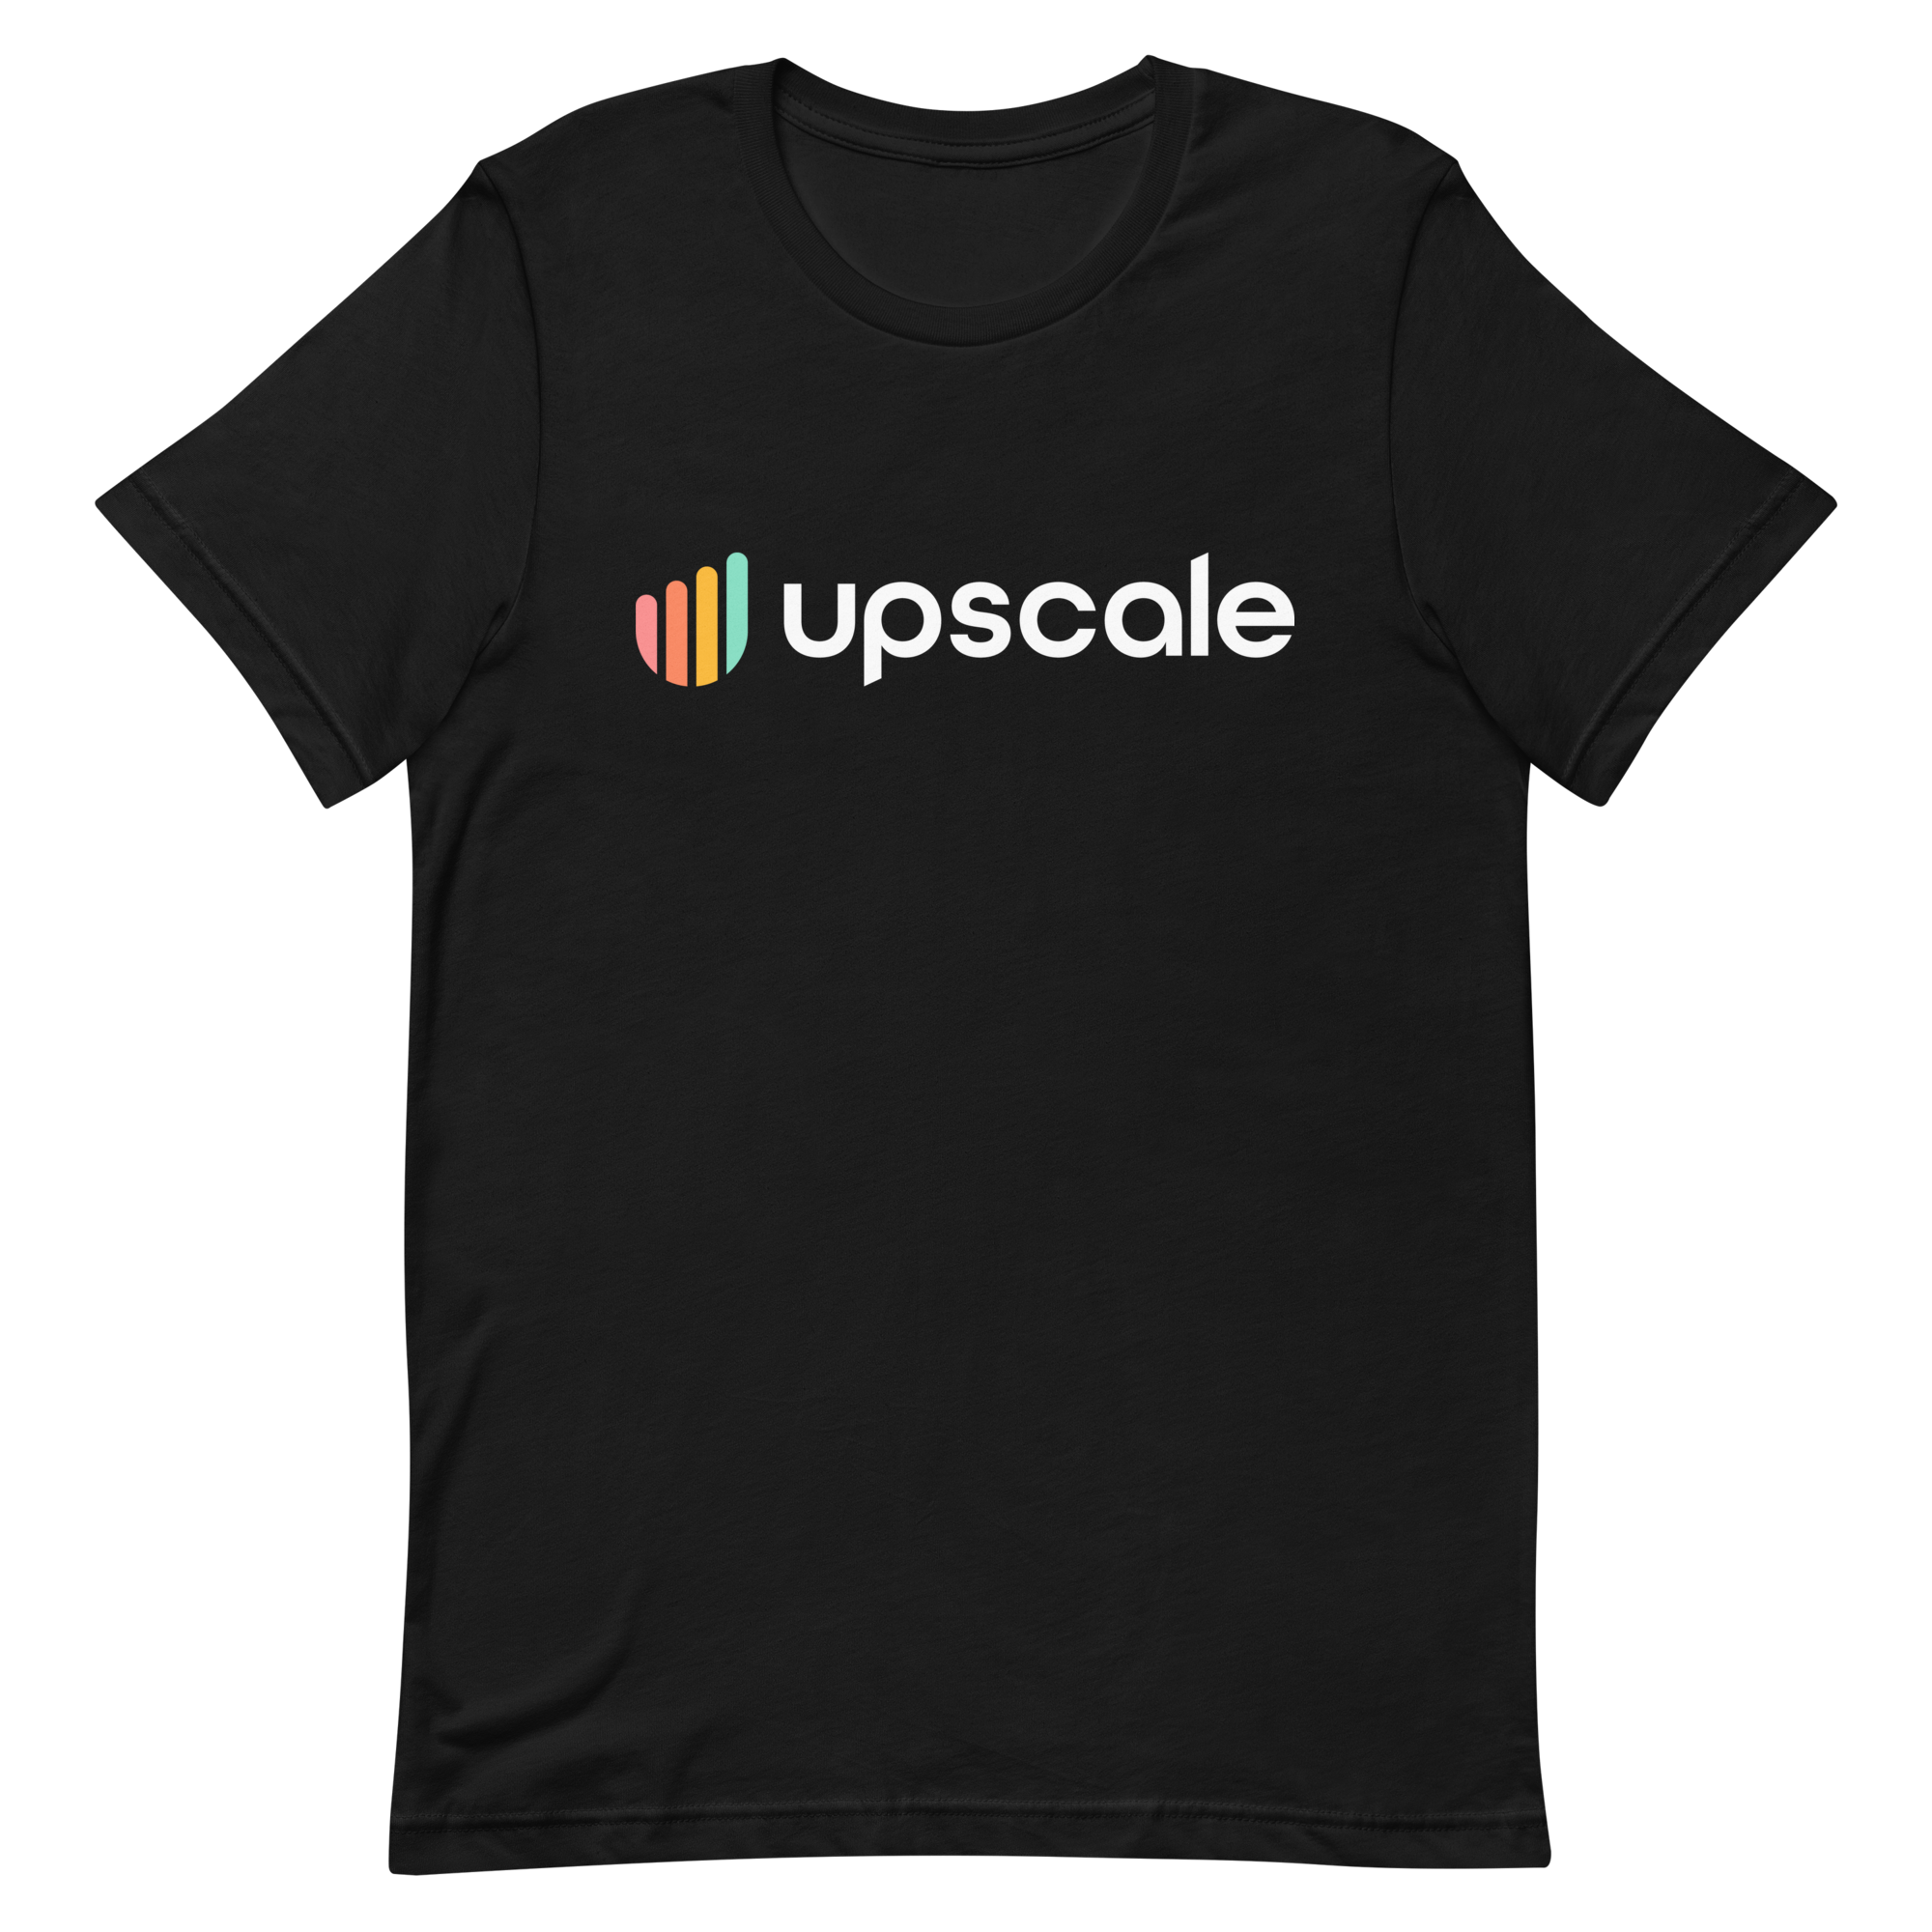 Upscale - Unisex T-shirt (dark logo)